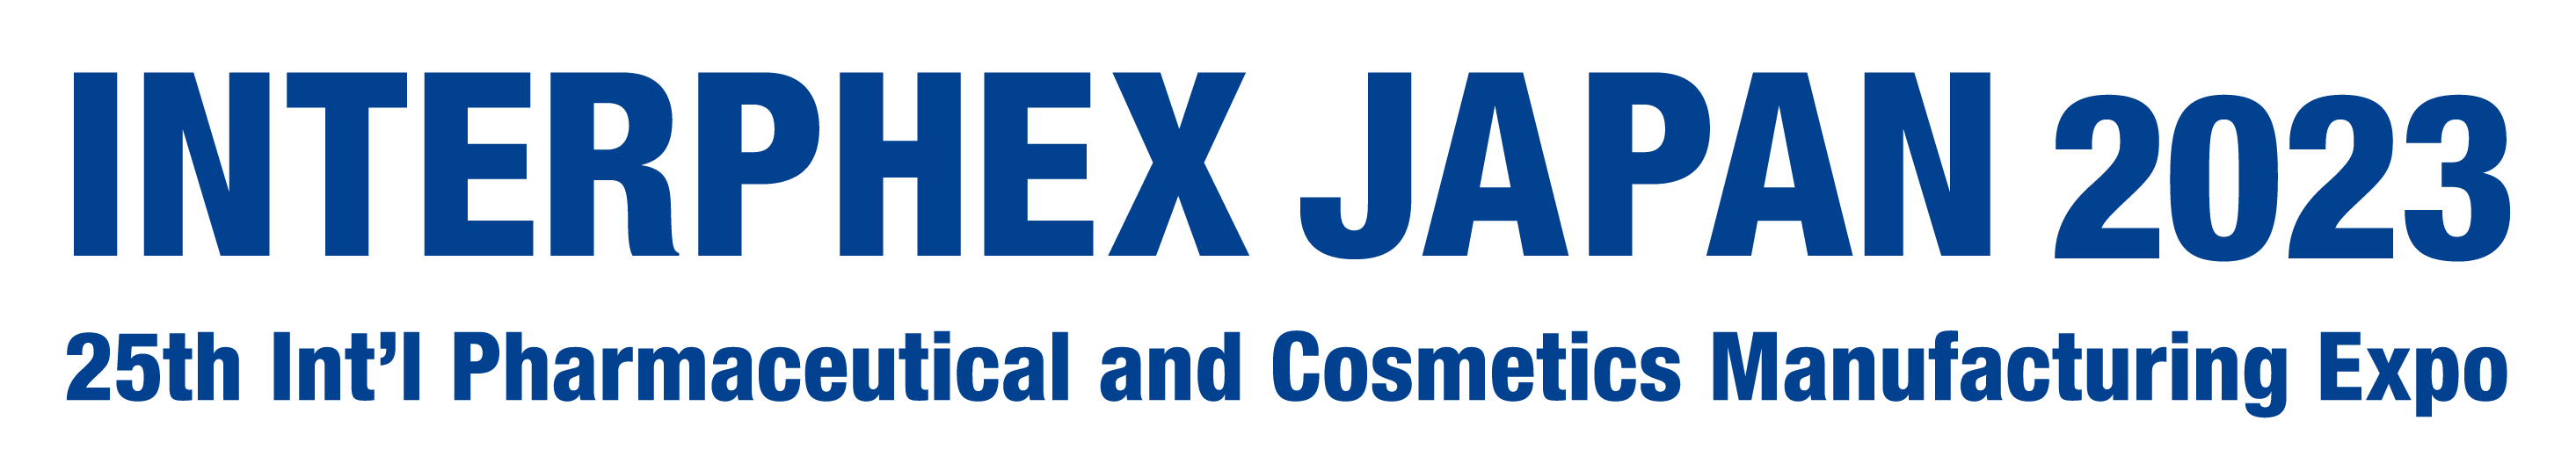 INTERPHEX JAPAN 2022